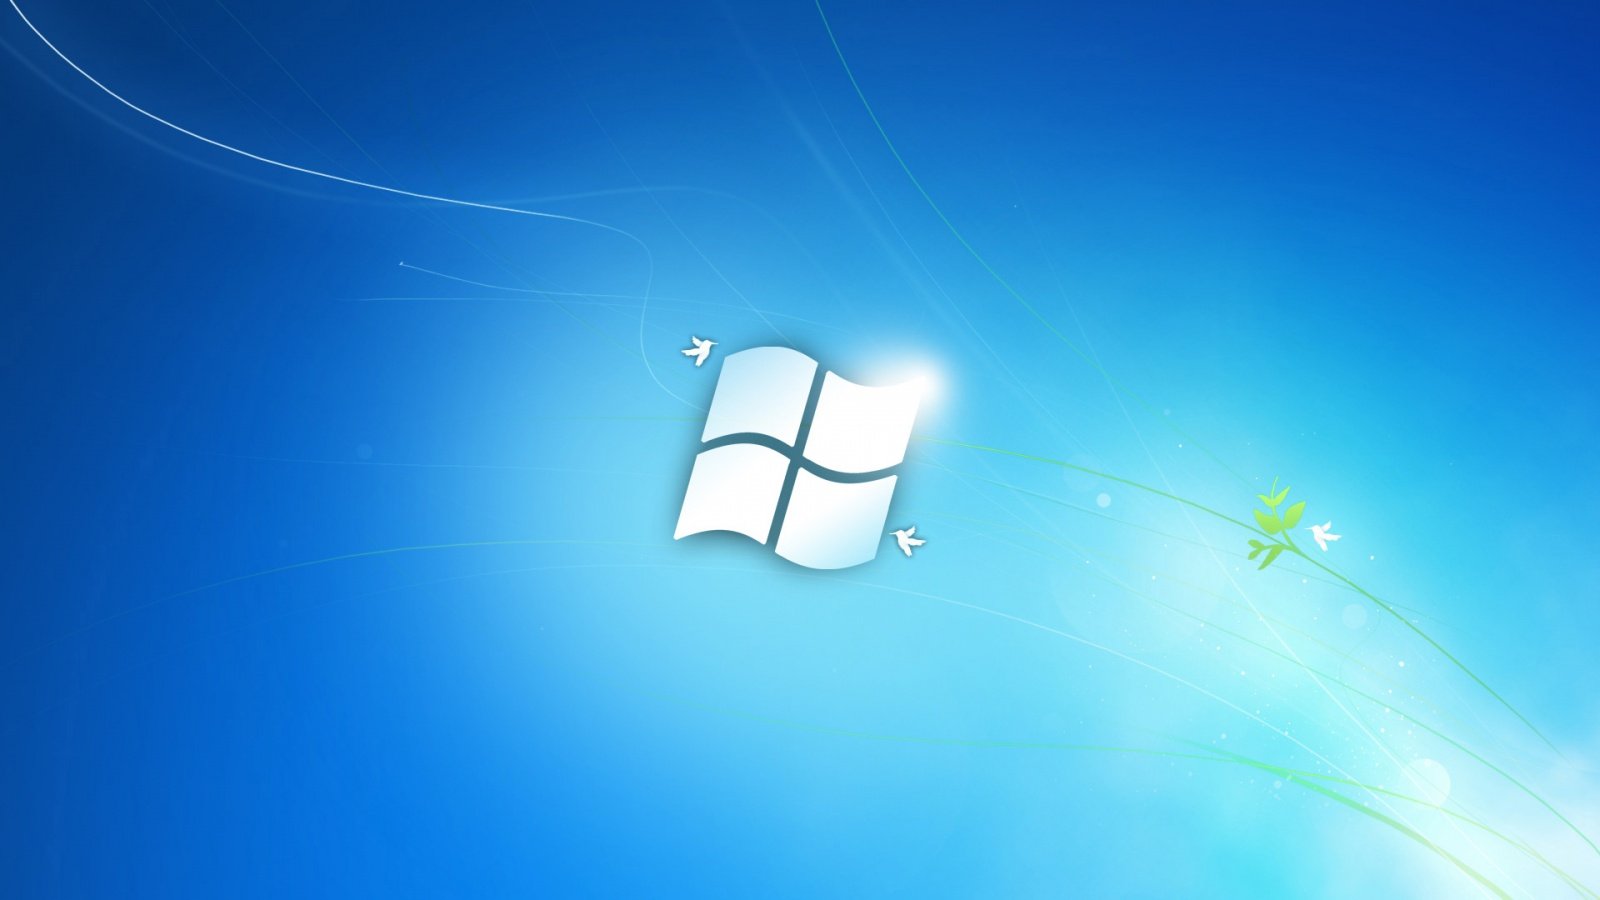 Windows 7 Wallpaper 1600x900 - WallpaperSafari